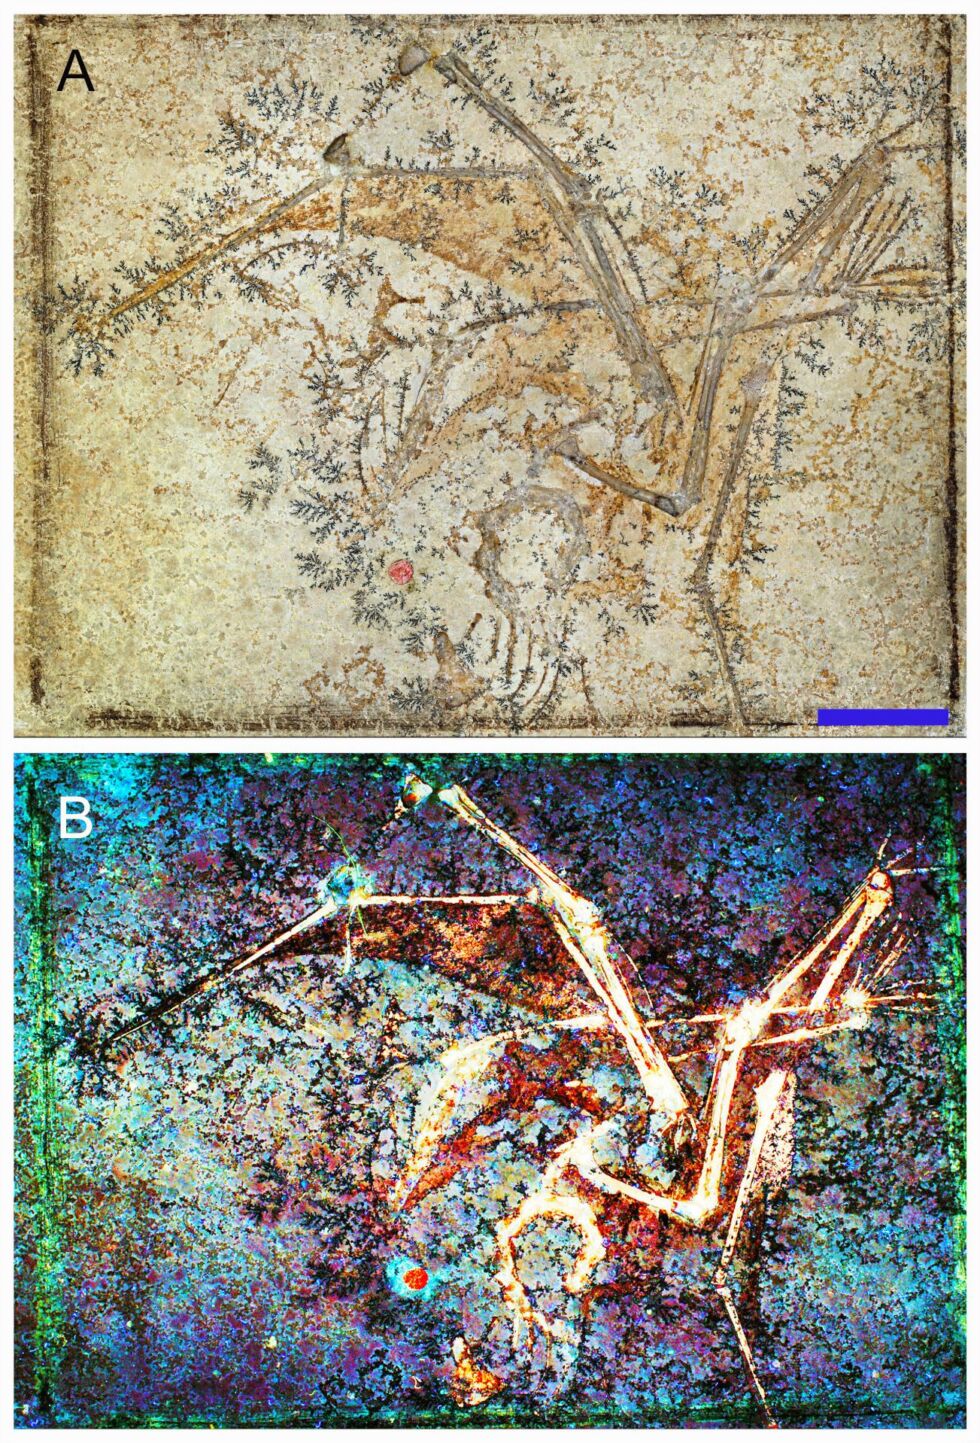 Kerangka dan jaringan lunak terkait dari fosil pterosaurus aurorazhdarchid.